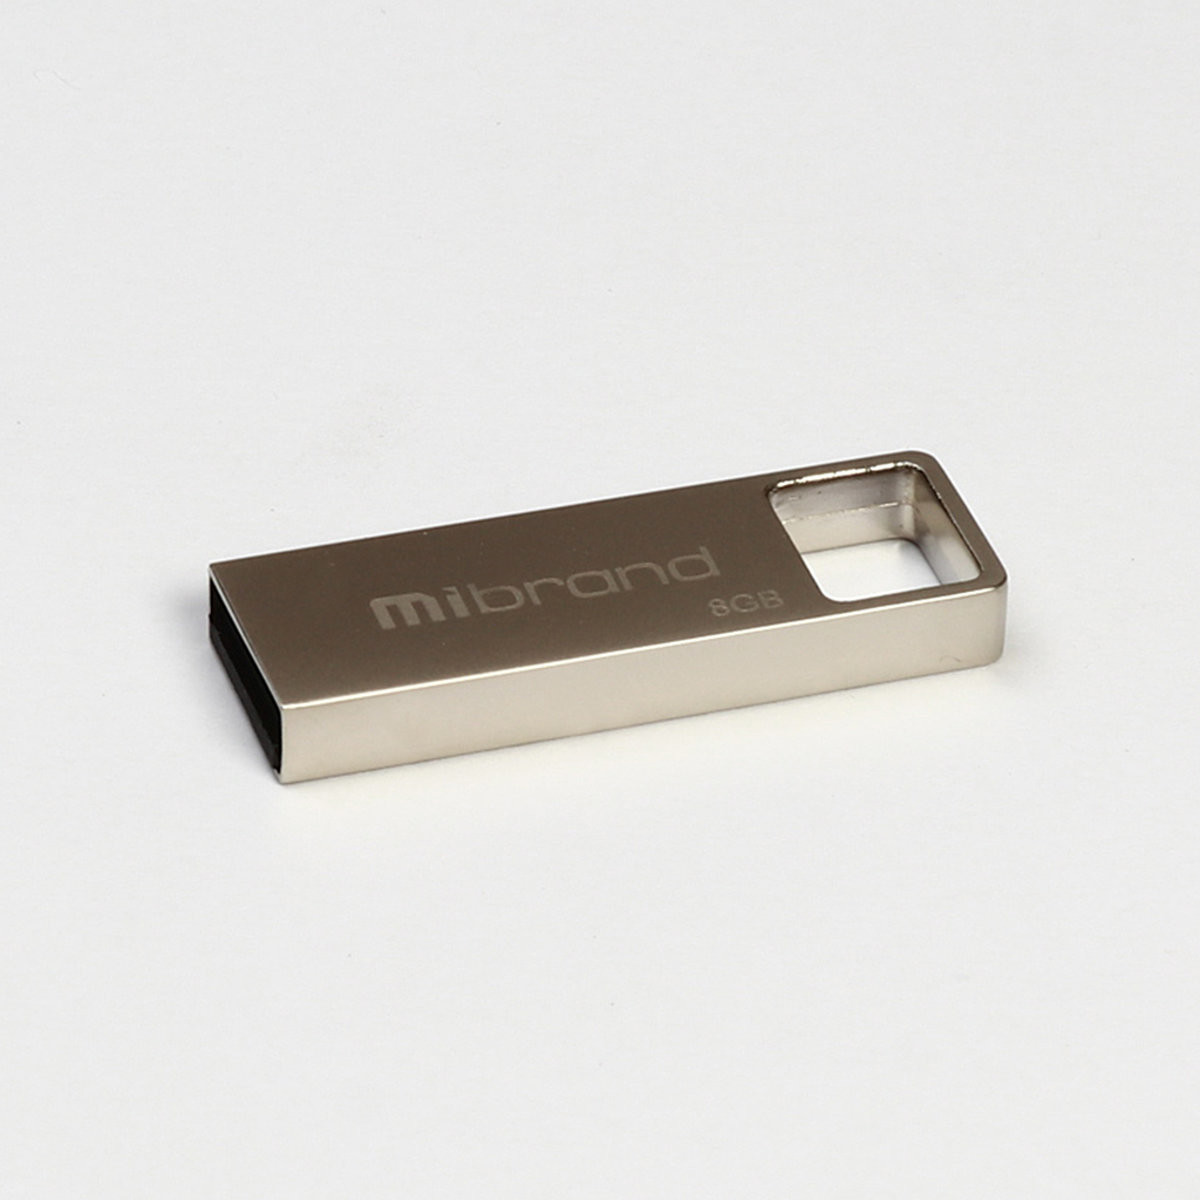 Flash Mibrand USB 2.0 Shark 8Gb Silver - 1